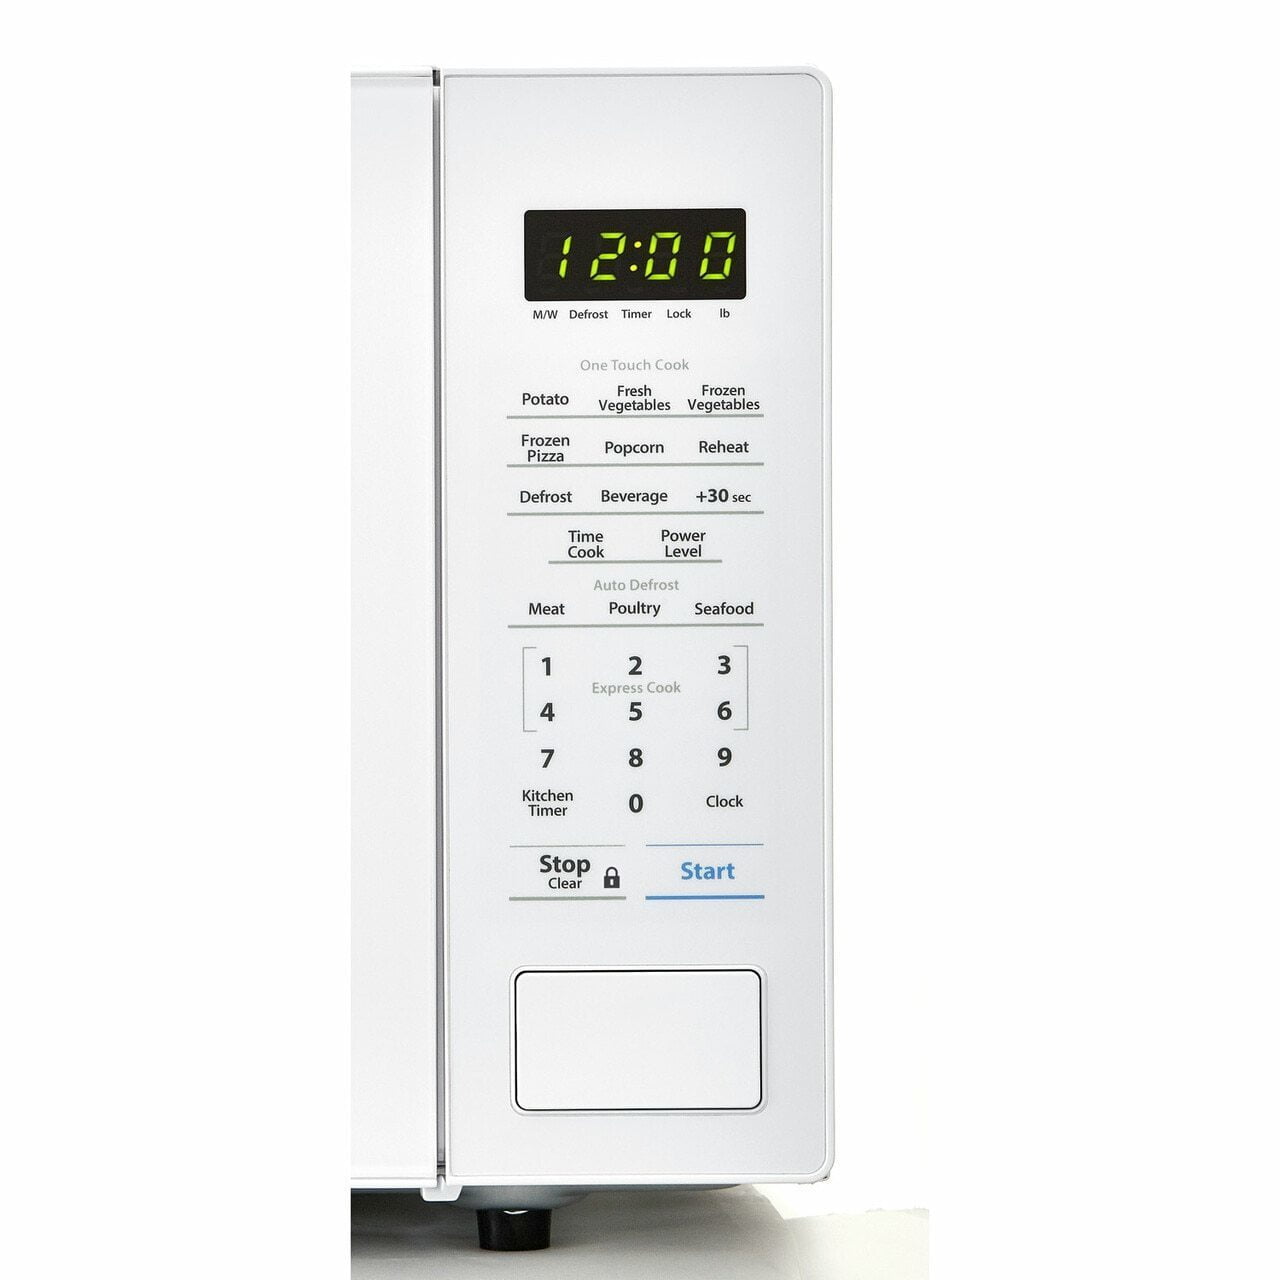 Sharp SMC1131CW 1.1 Cu. Ft. 1000W Sharp Countertop White Microwave